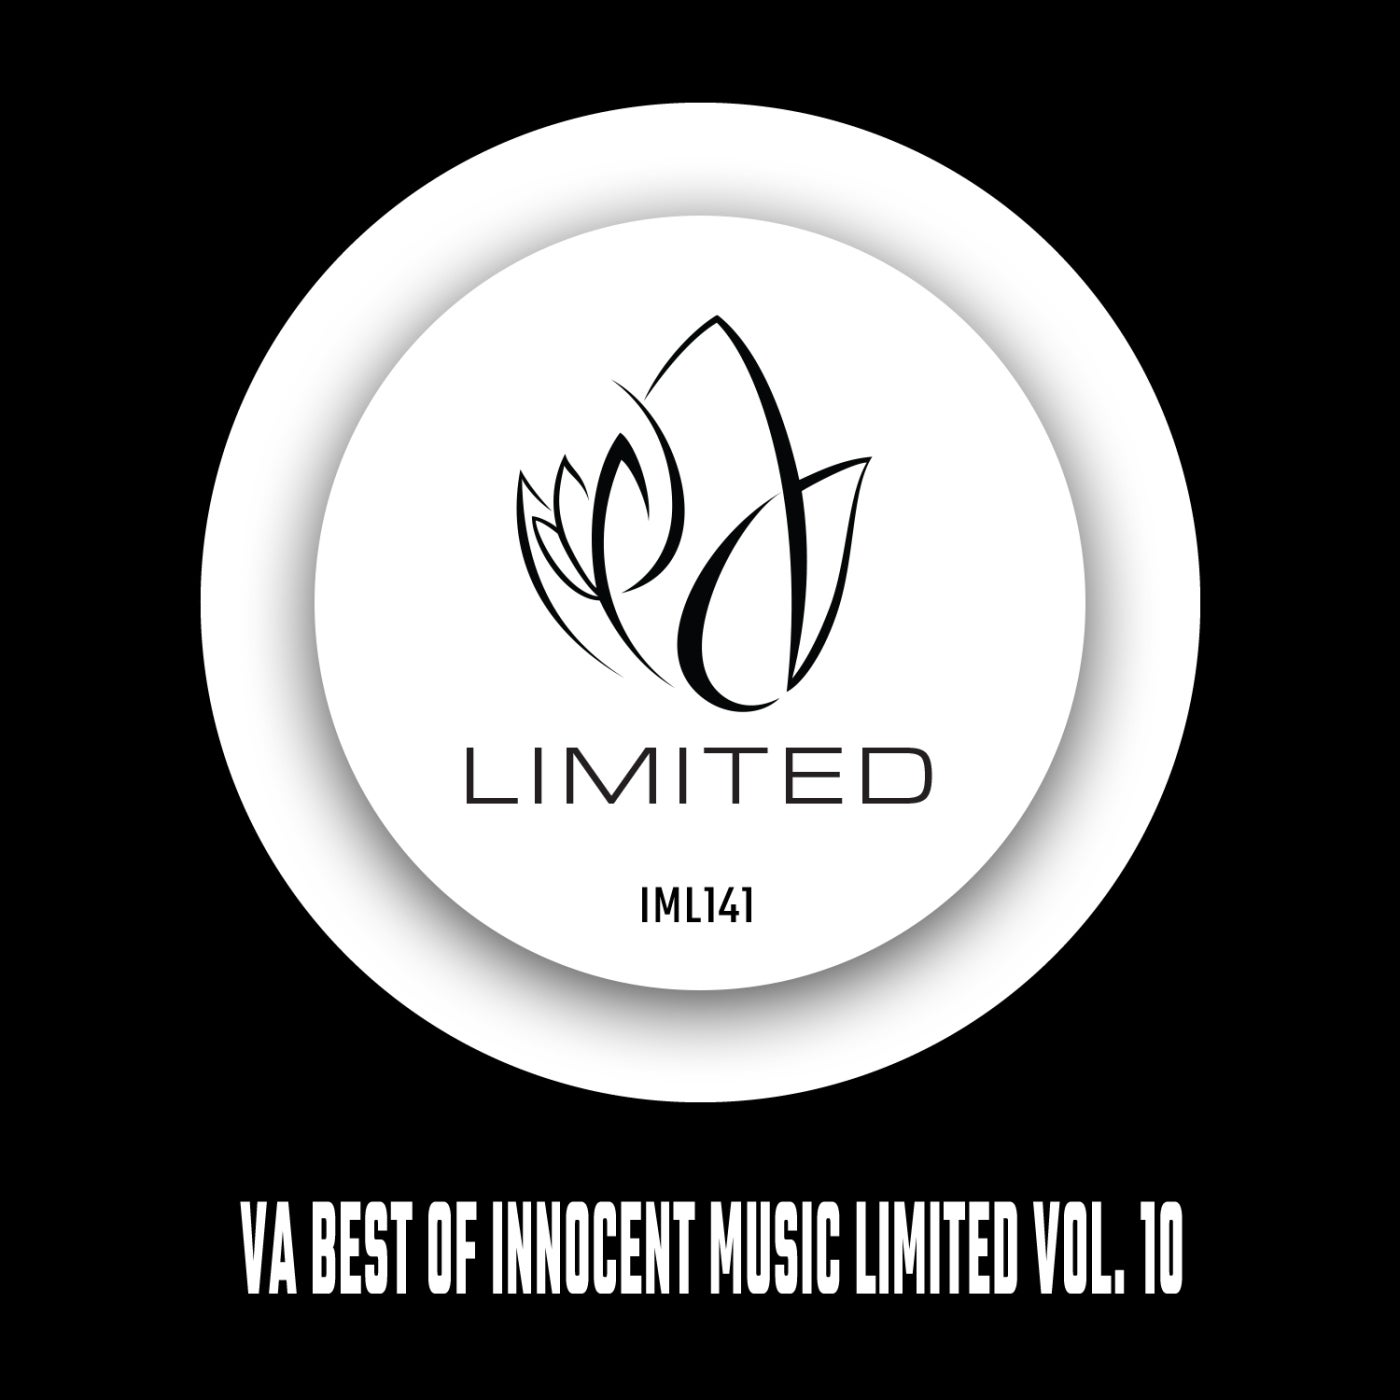 VA Best Of Innocent Music Limited, Vol. 10